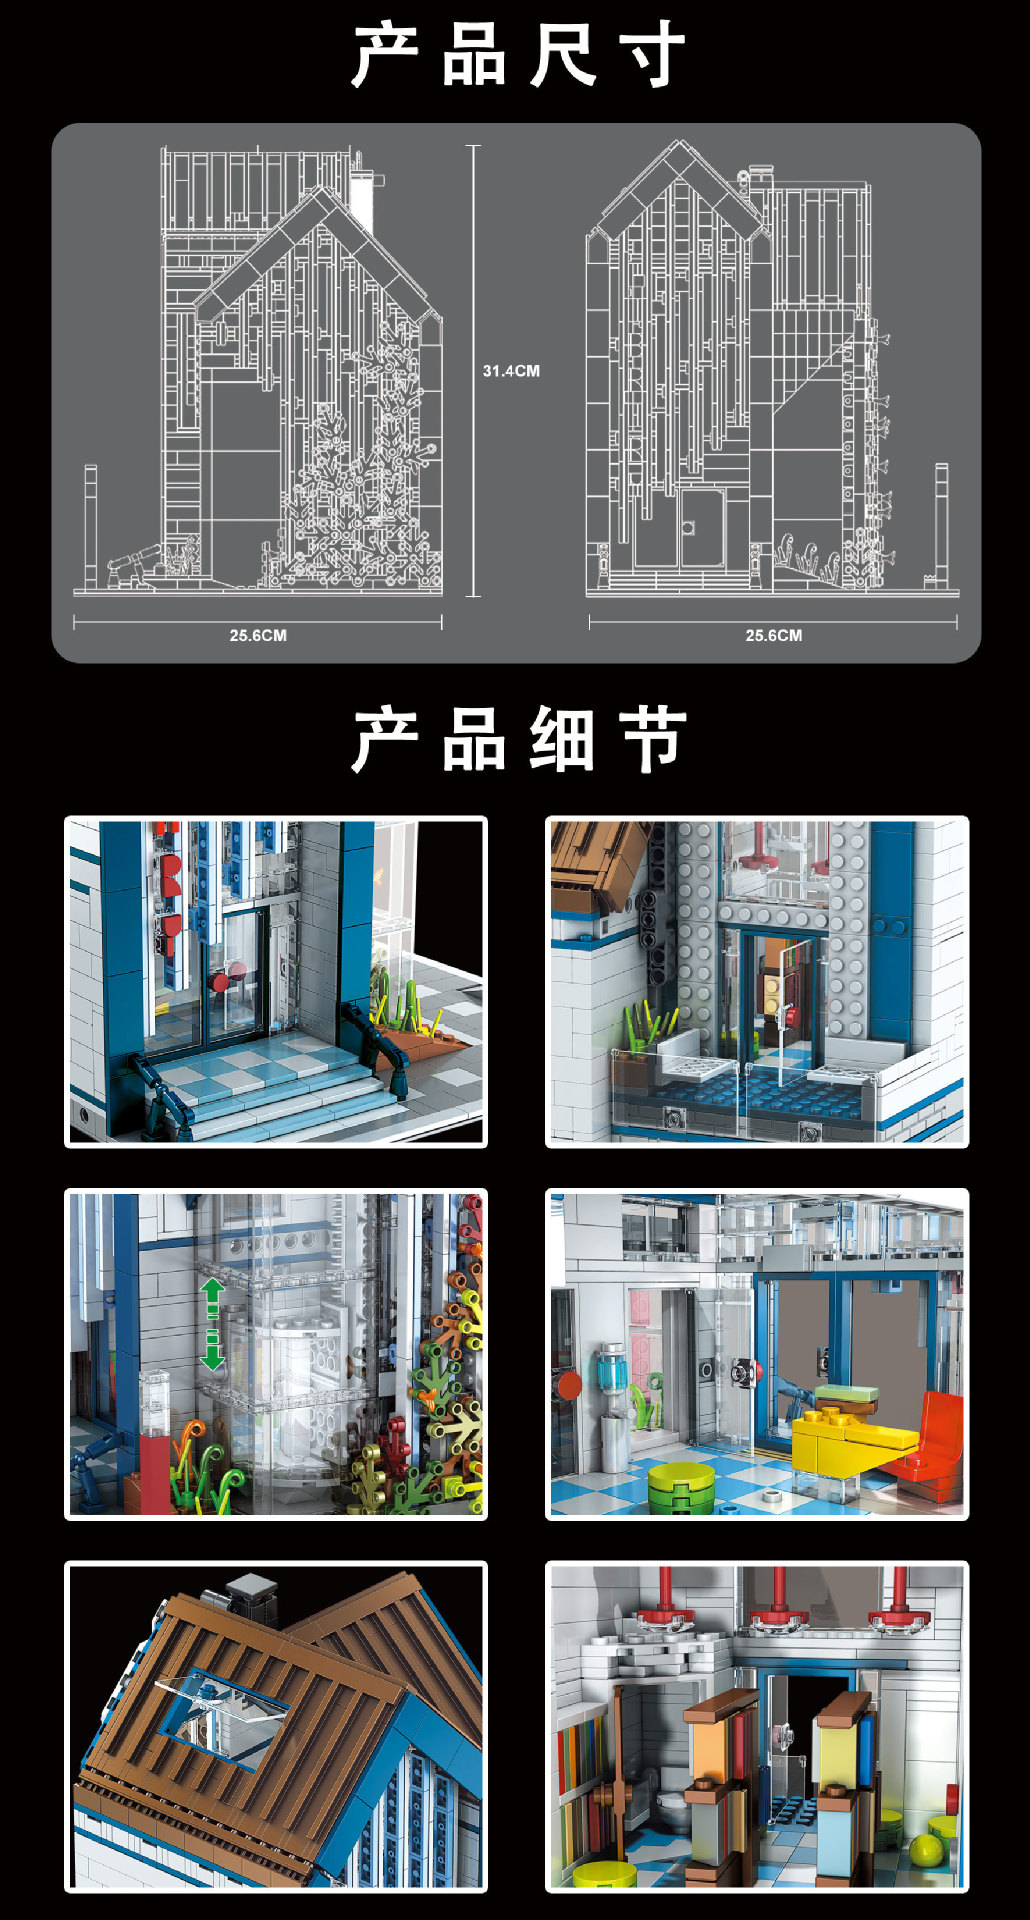 MOLD KING 16022 현대 도서관 빌딩 블록 장난감 세트